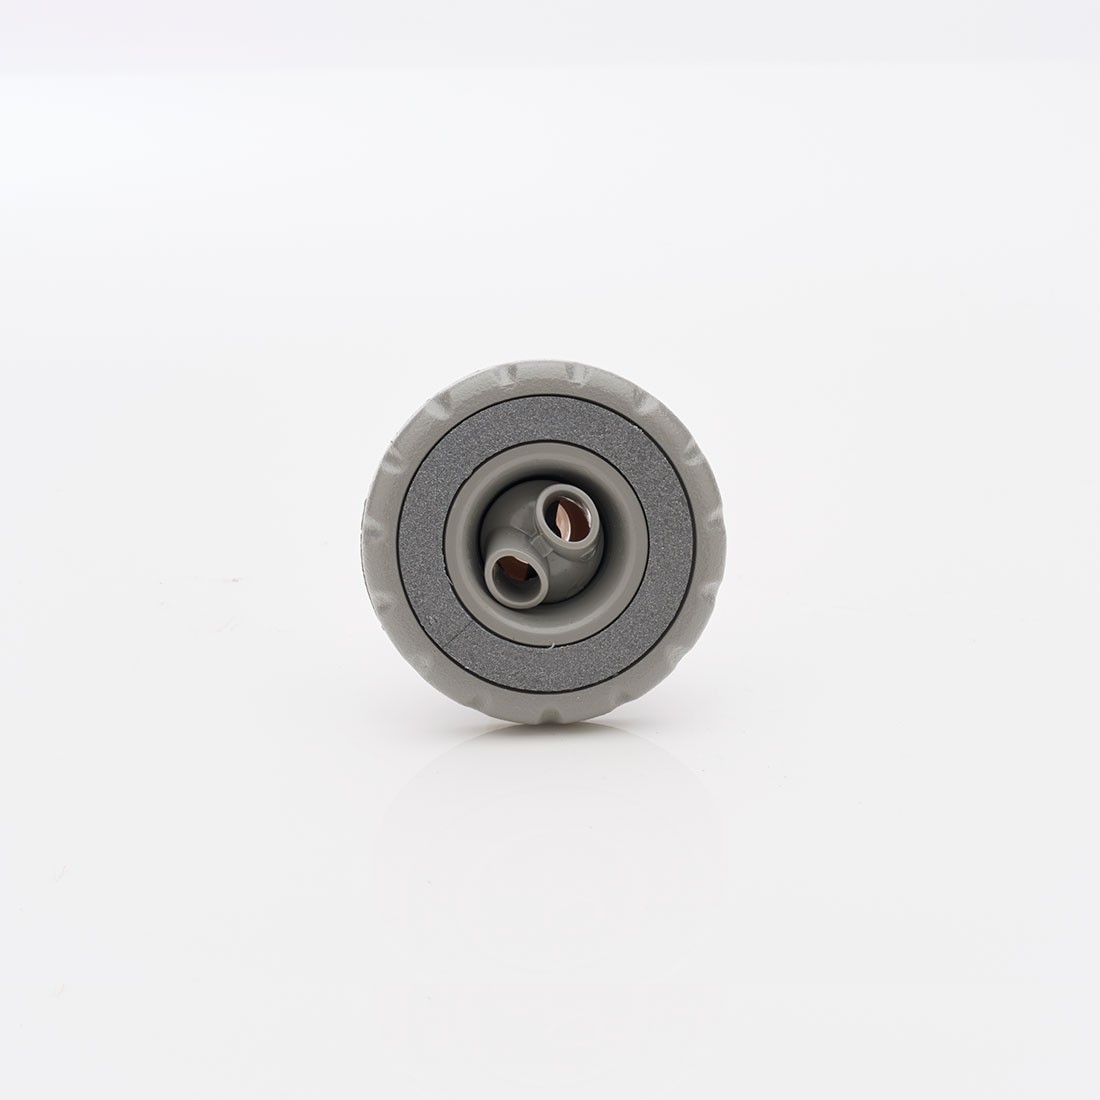 Small Pulsator Accu-Jet Grey